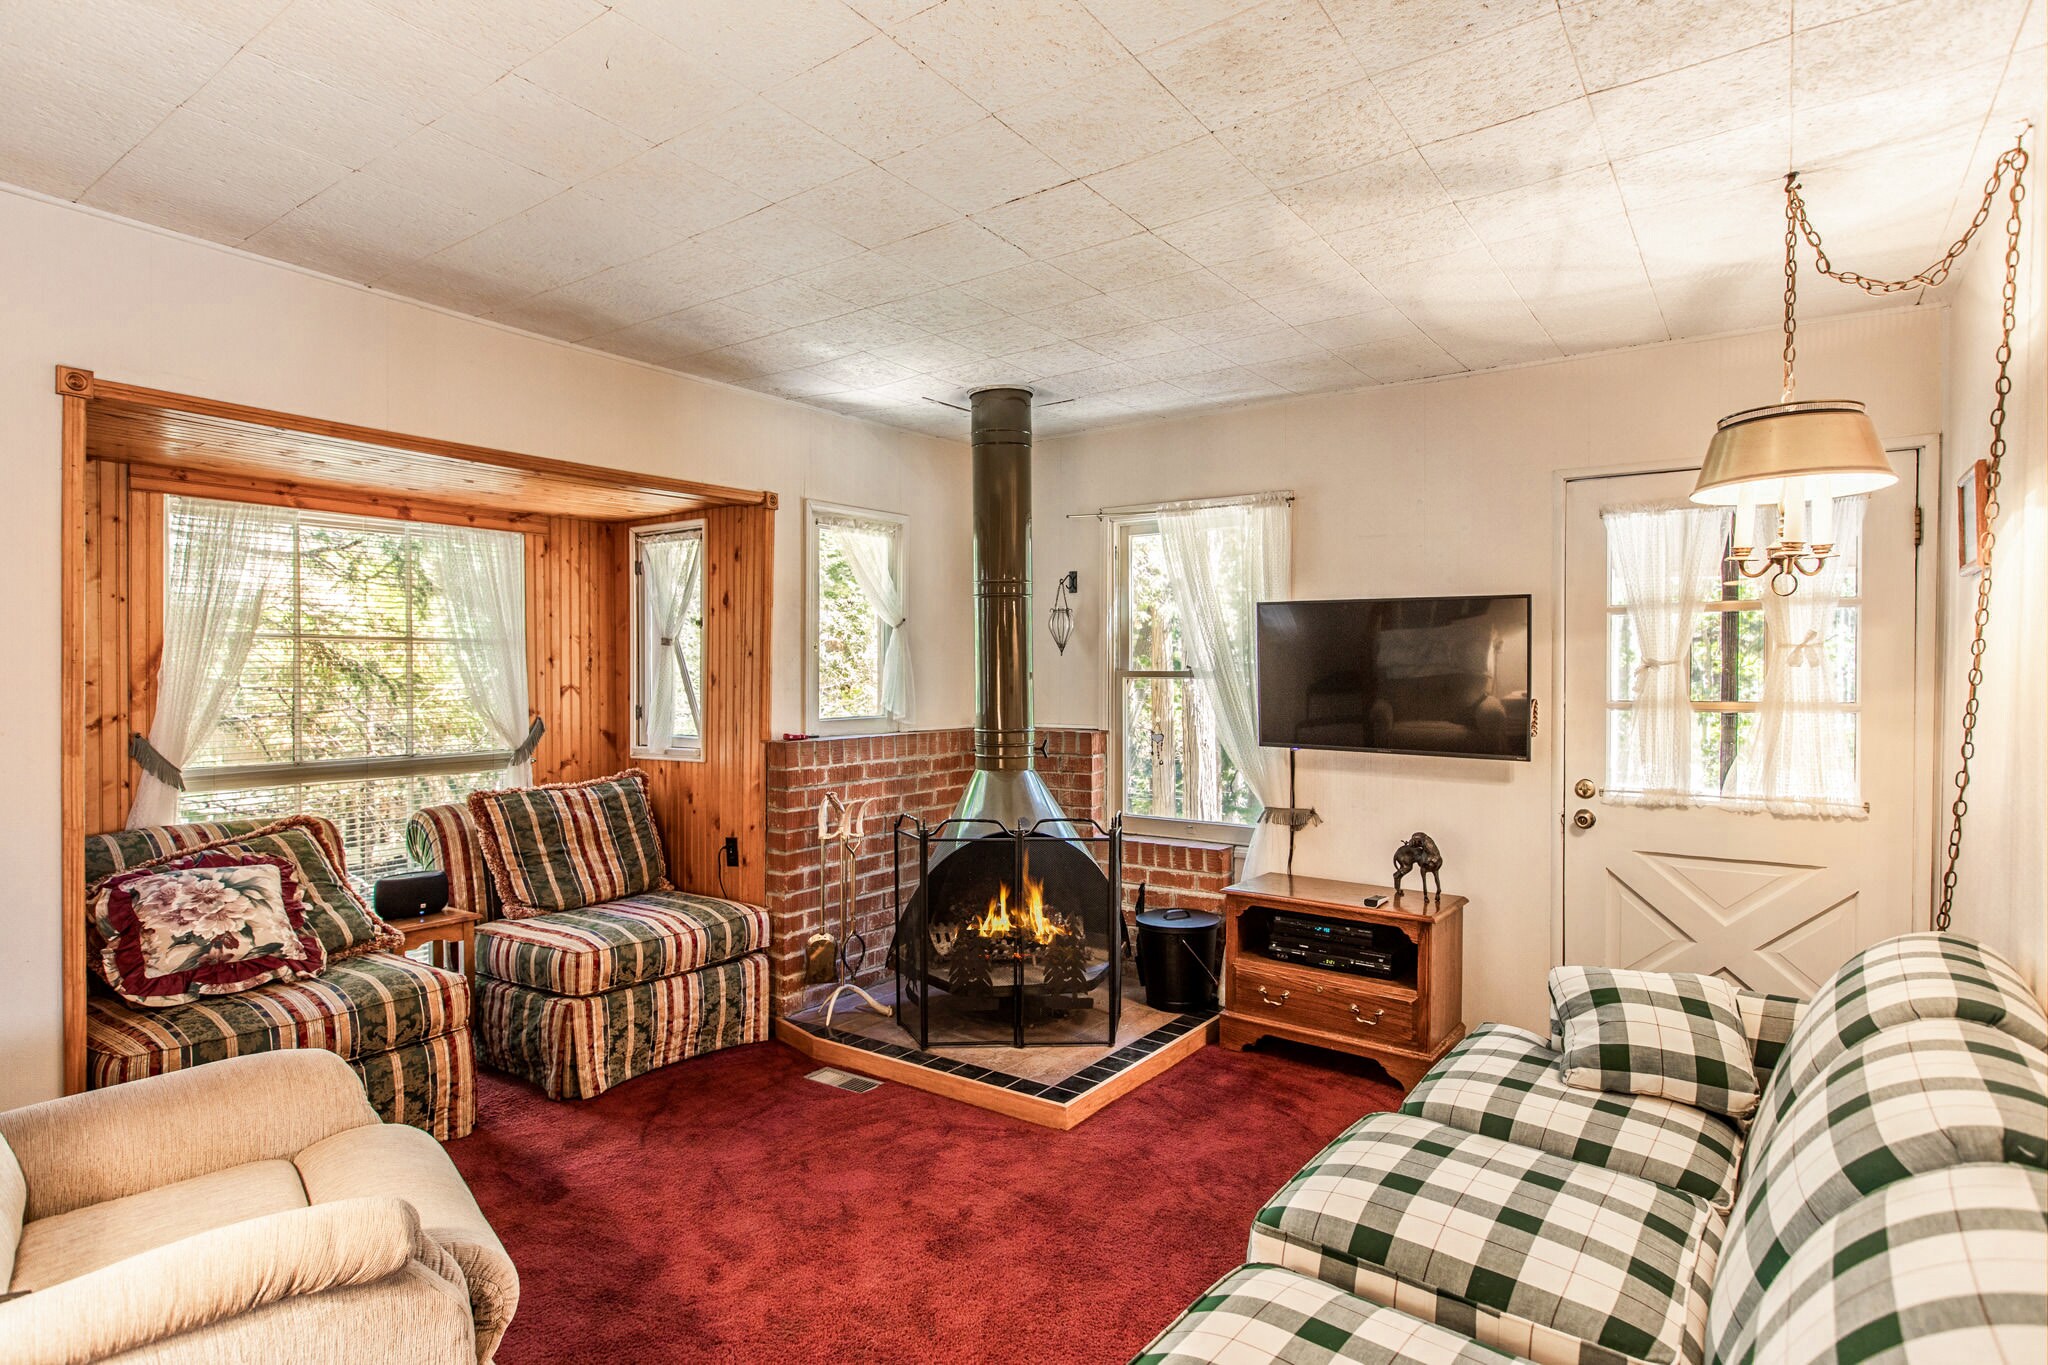 Lounge around the wood-burning fireplace.